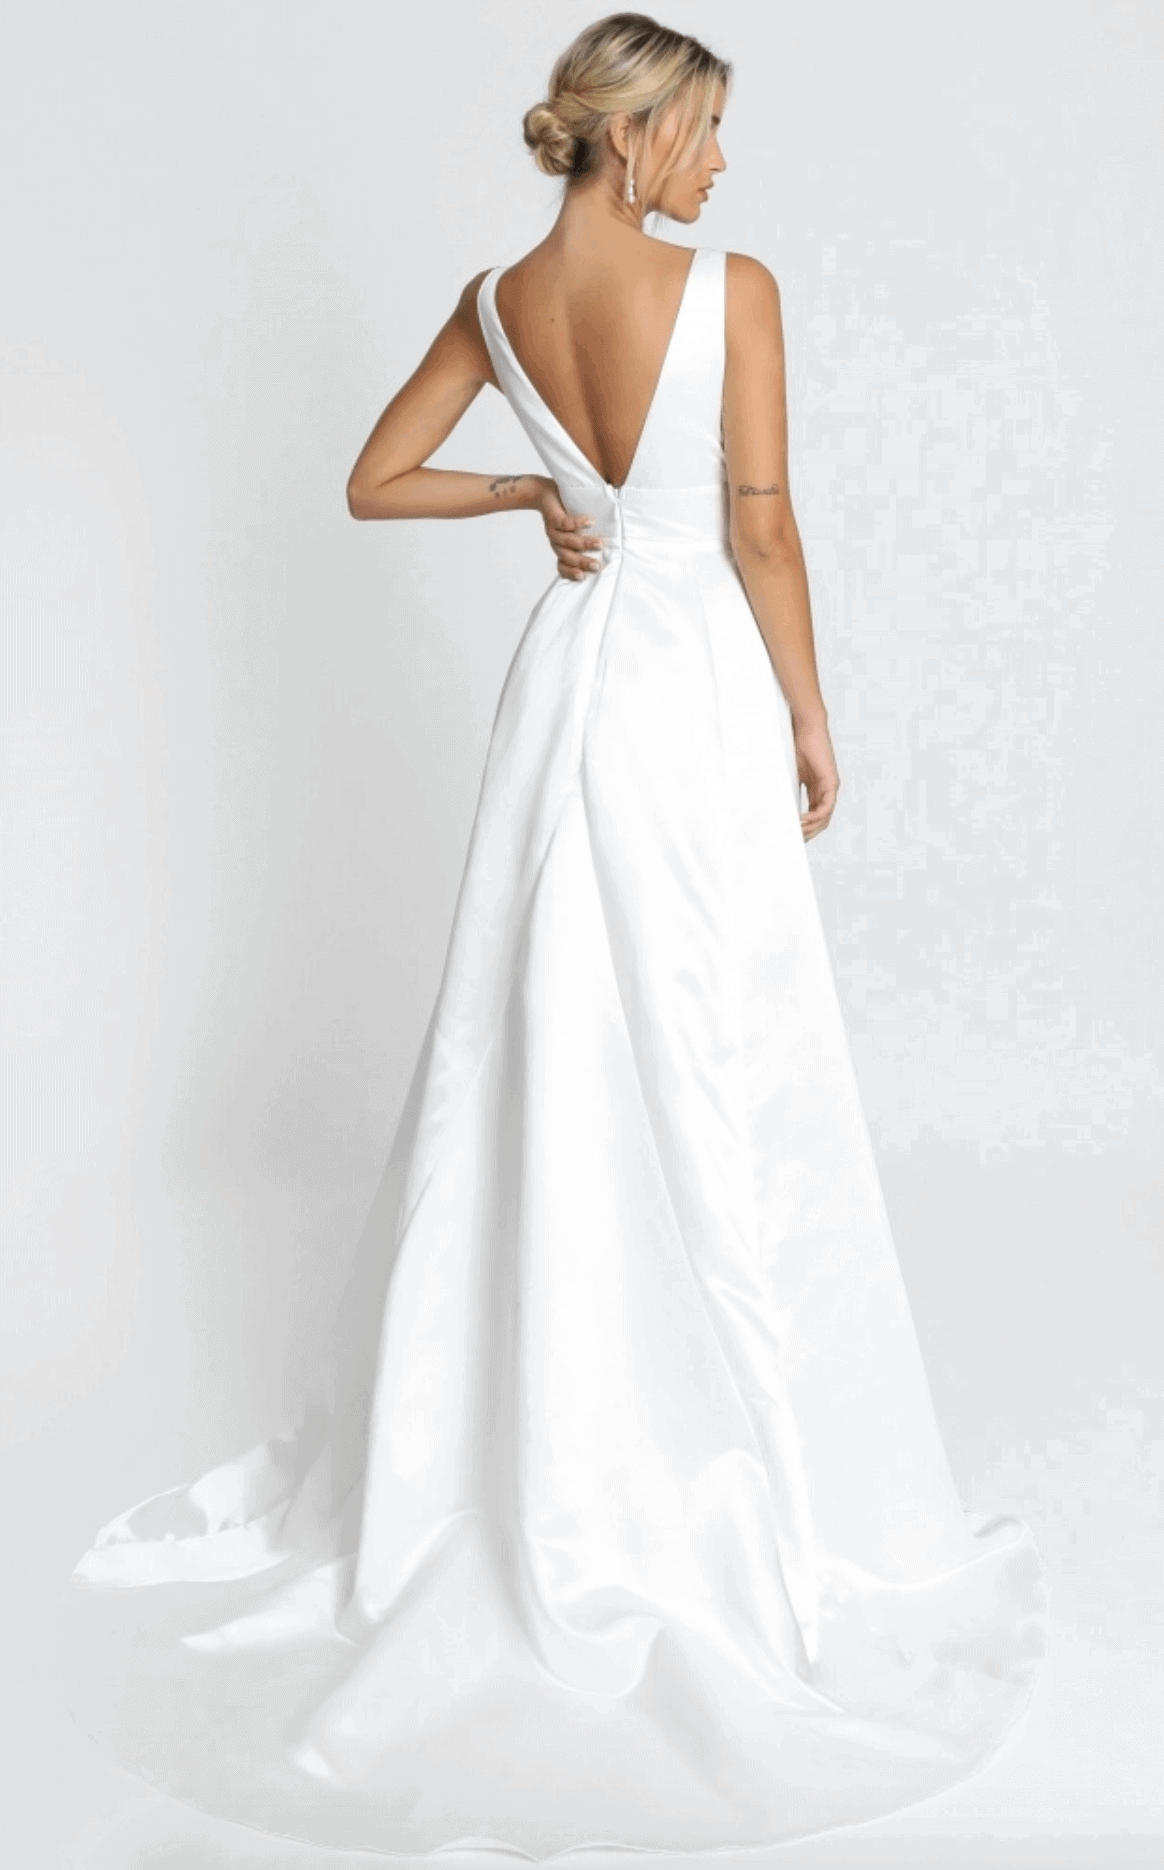 Cheap Affordable Wedding Dresses Deep V Neck Eyes of the Beholder Gowns in White Showpo Bridal